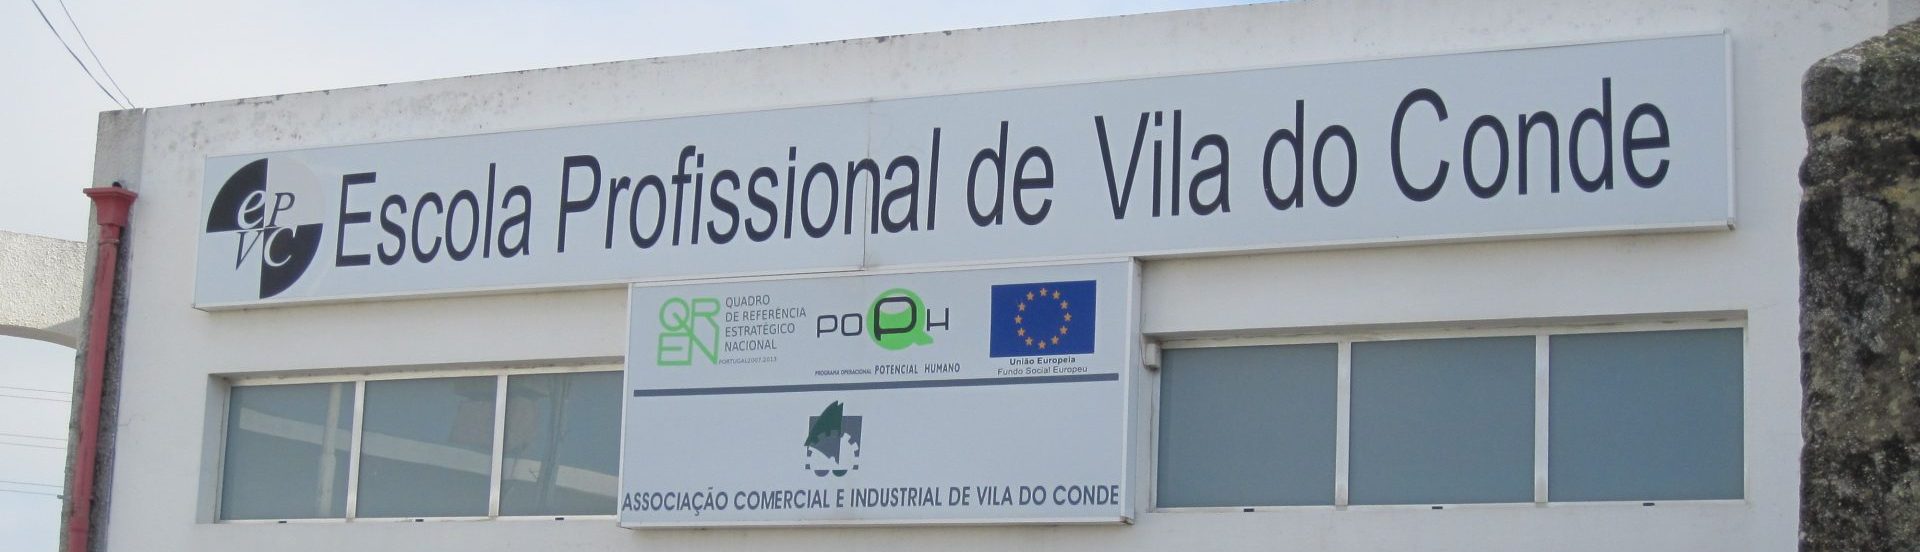 Escola Profissional de Vila do Conde – EPVC